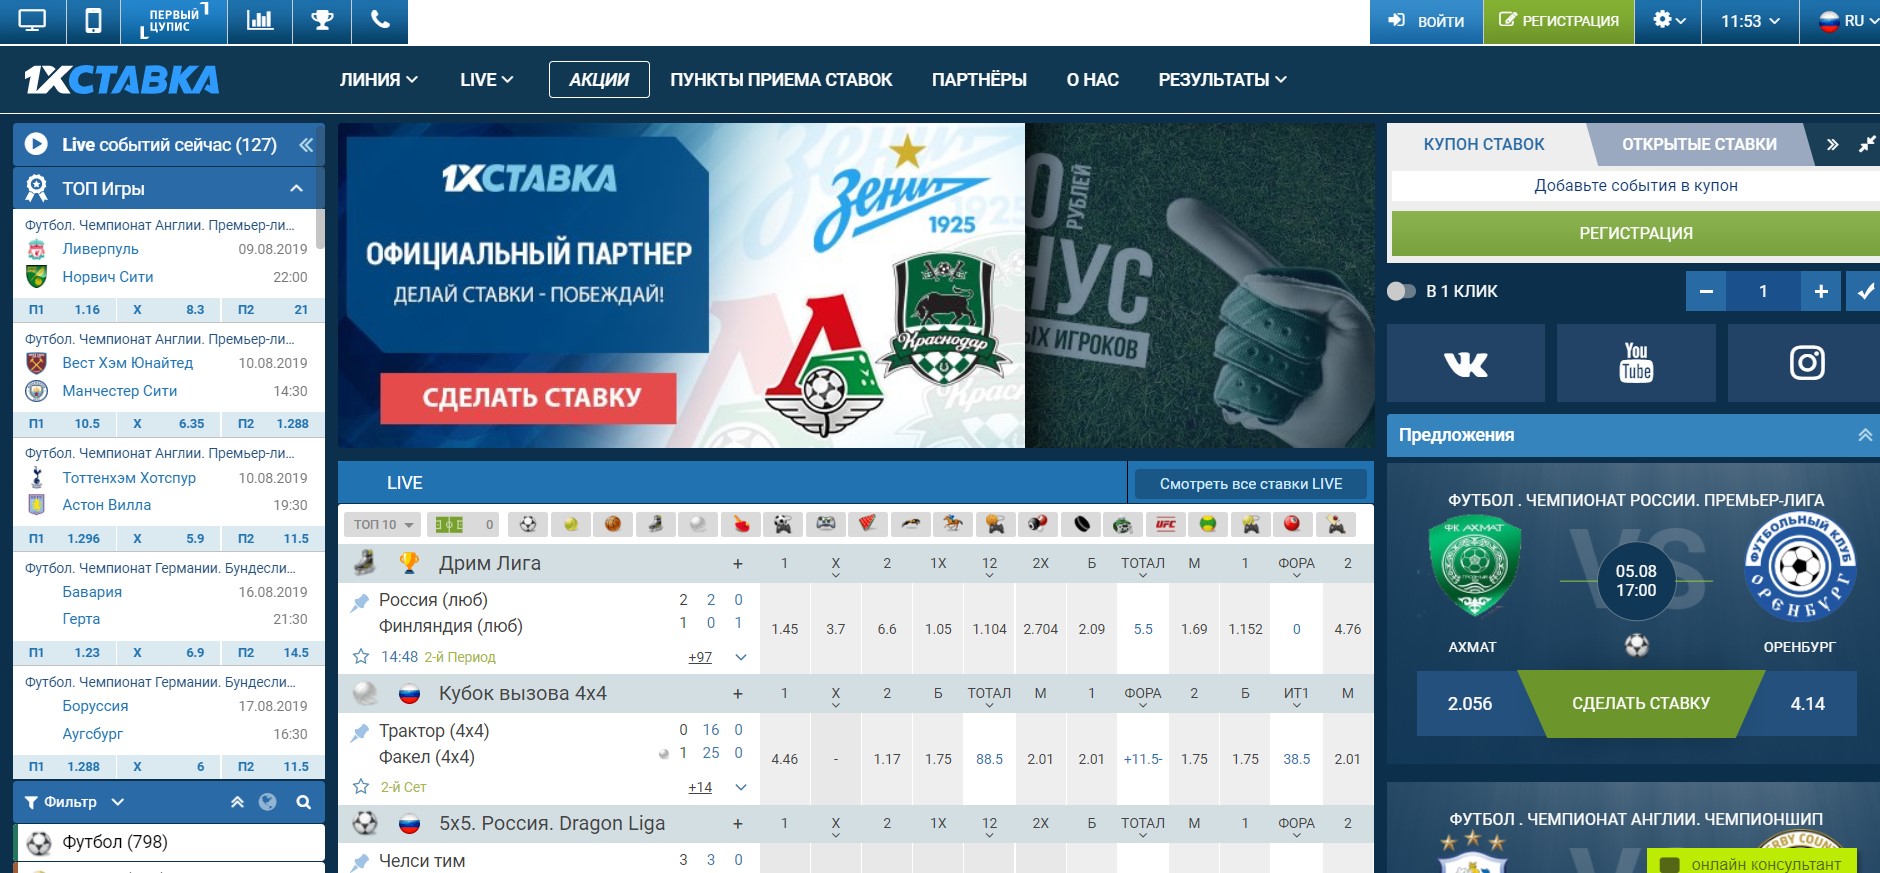 1хставка ru официальный сайт ставки на спорт